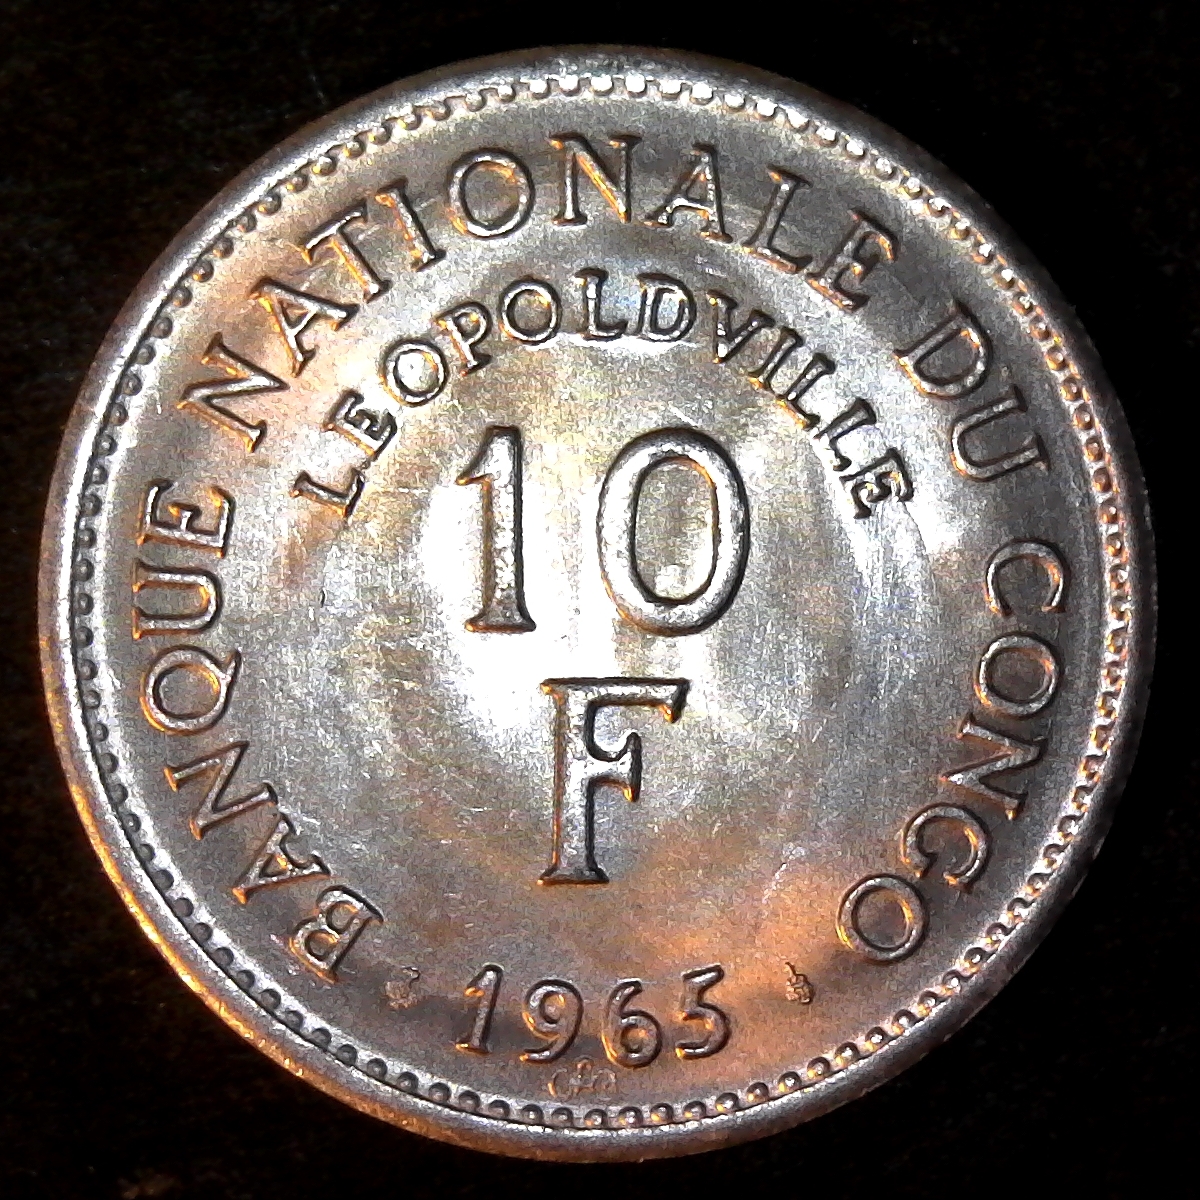 Congo 10 Francs 1965 rev.jpg